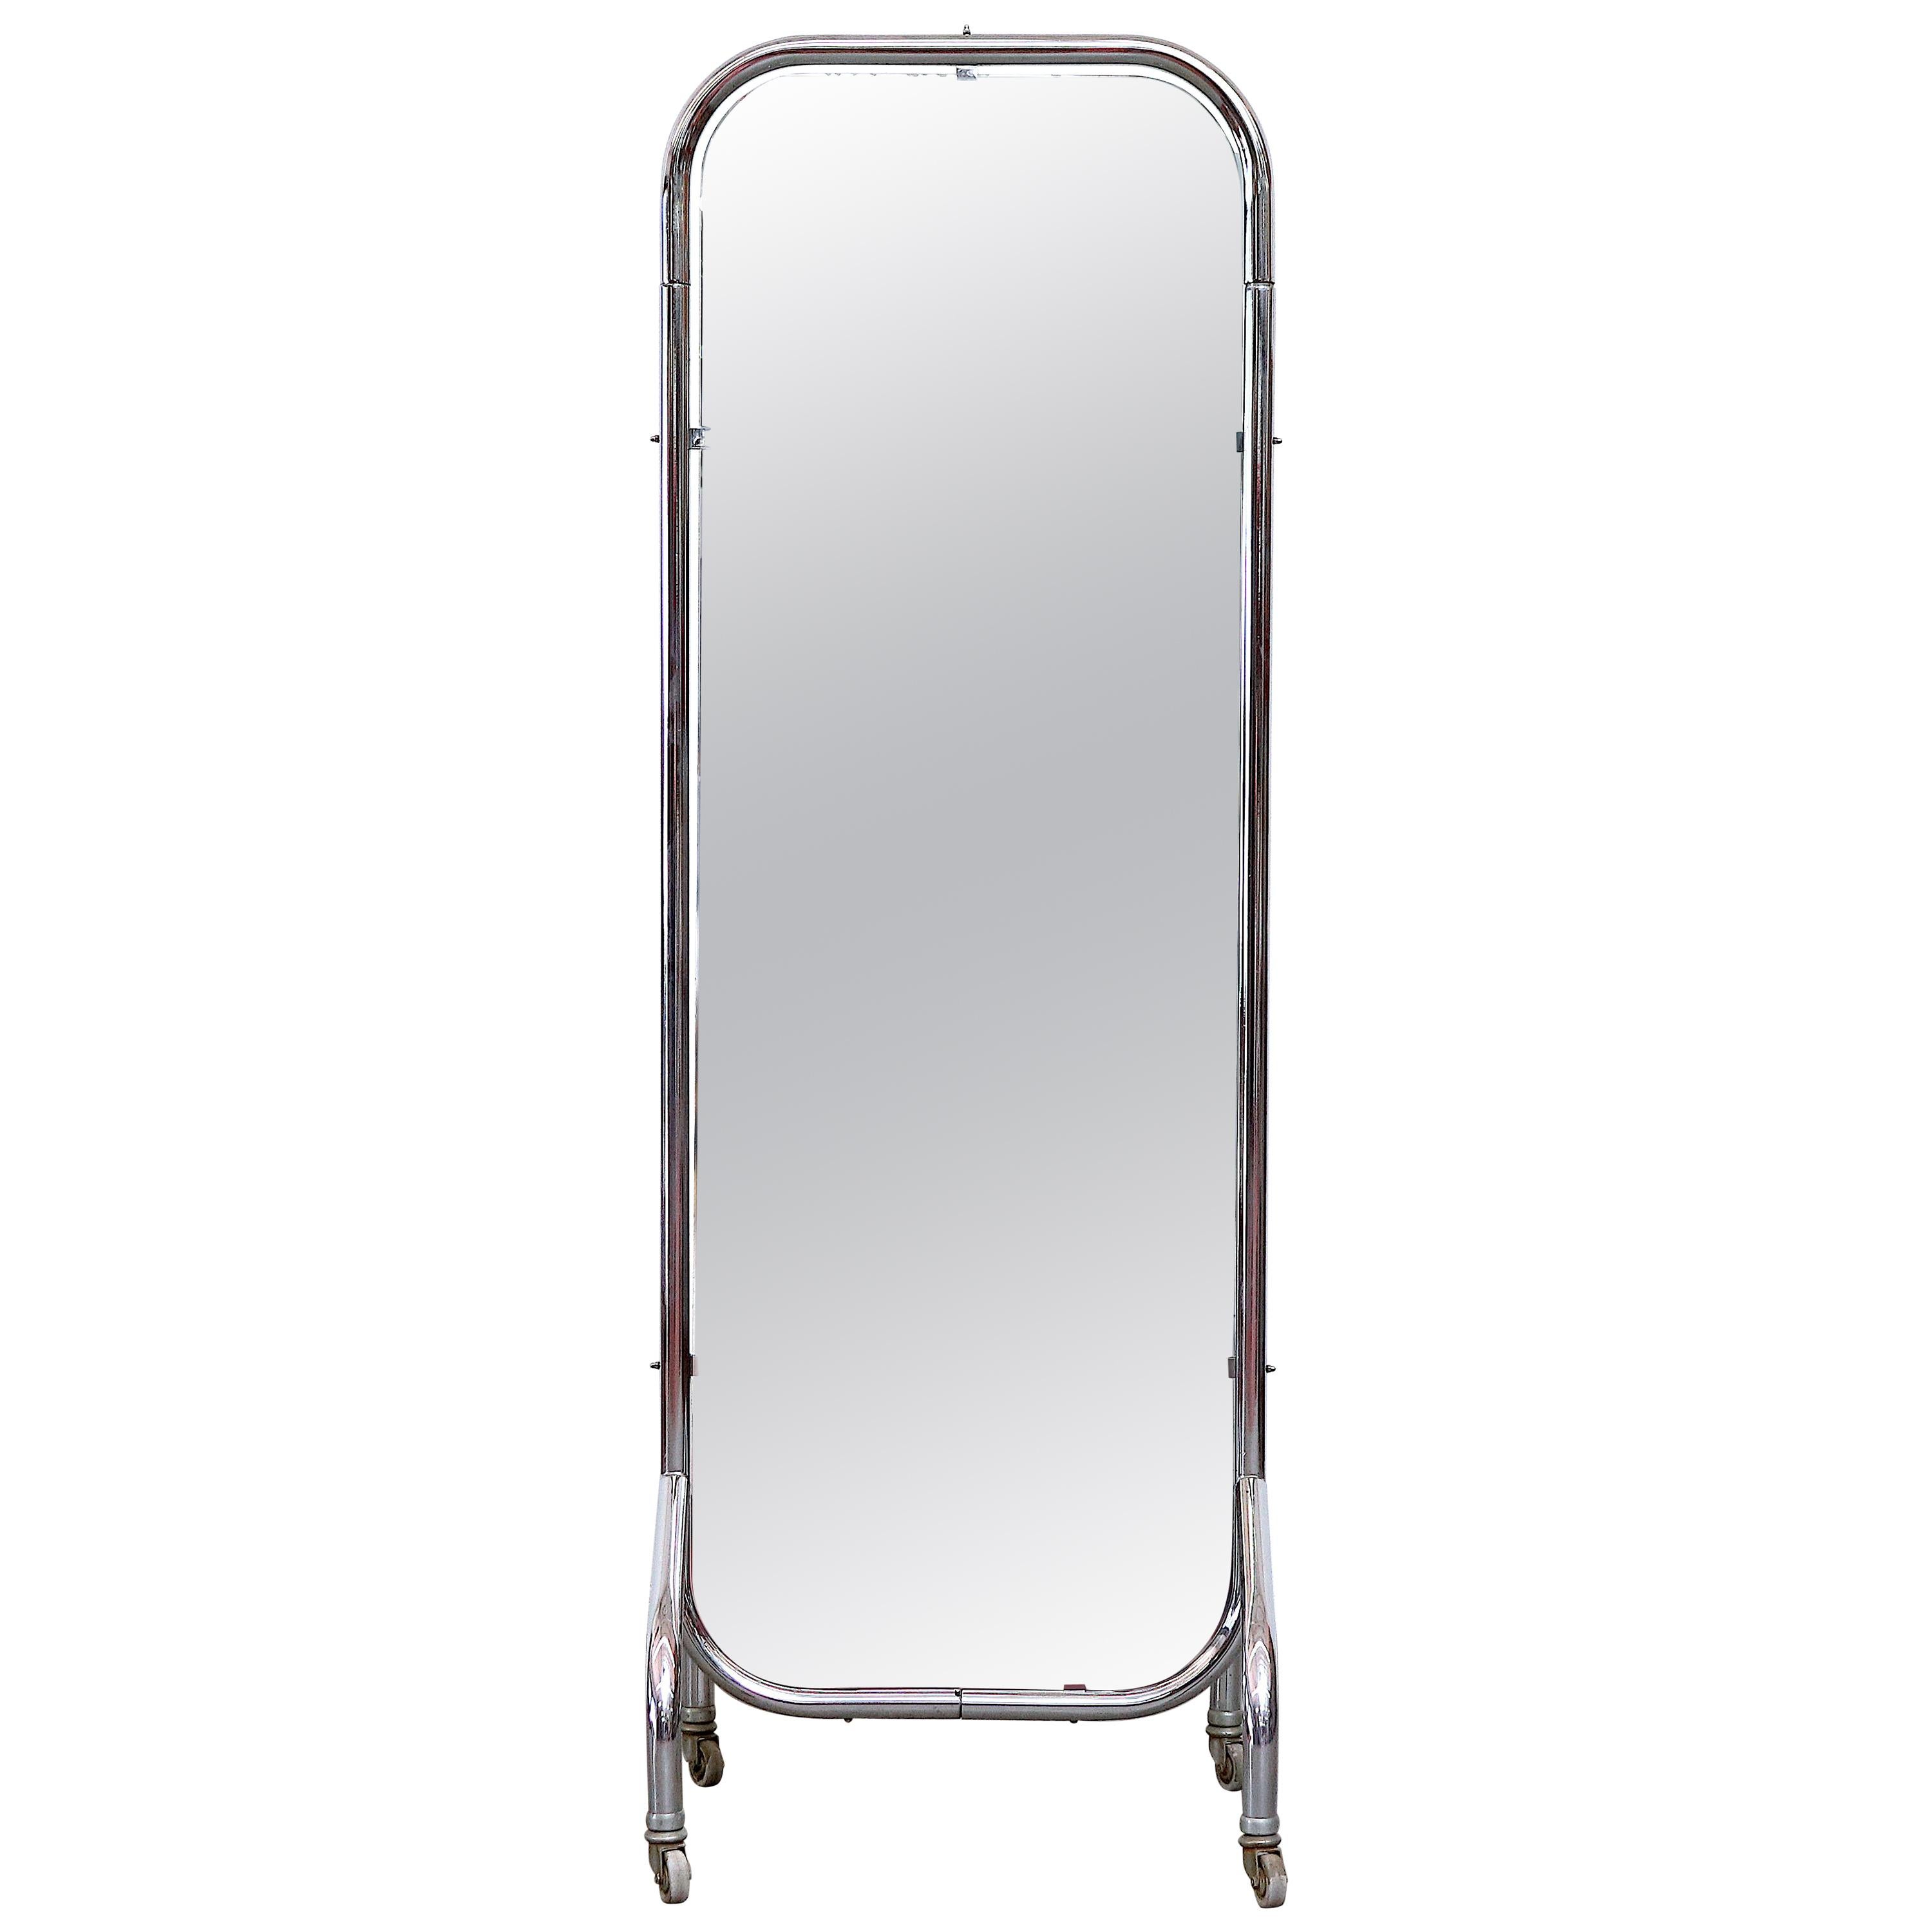 Bauhaus Standing Mirror with Chrome Frame